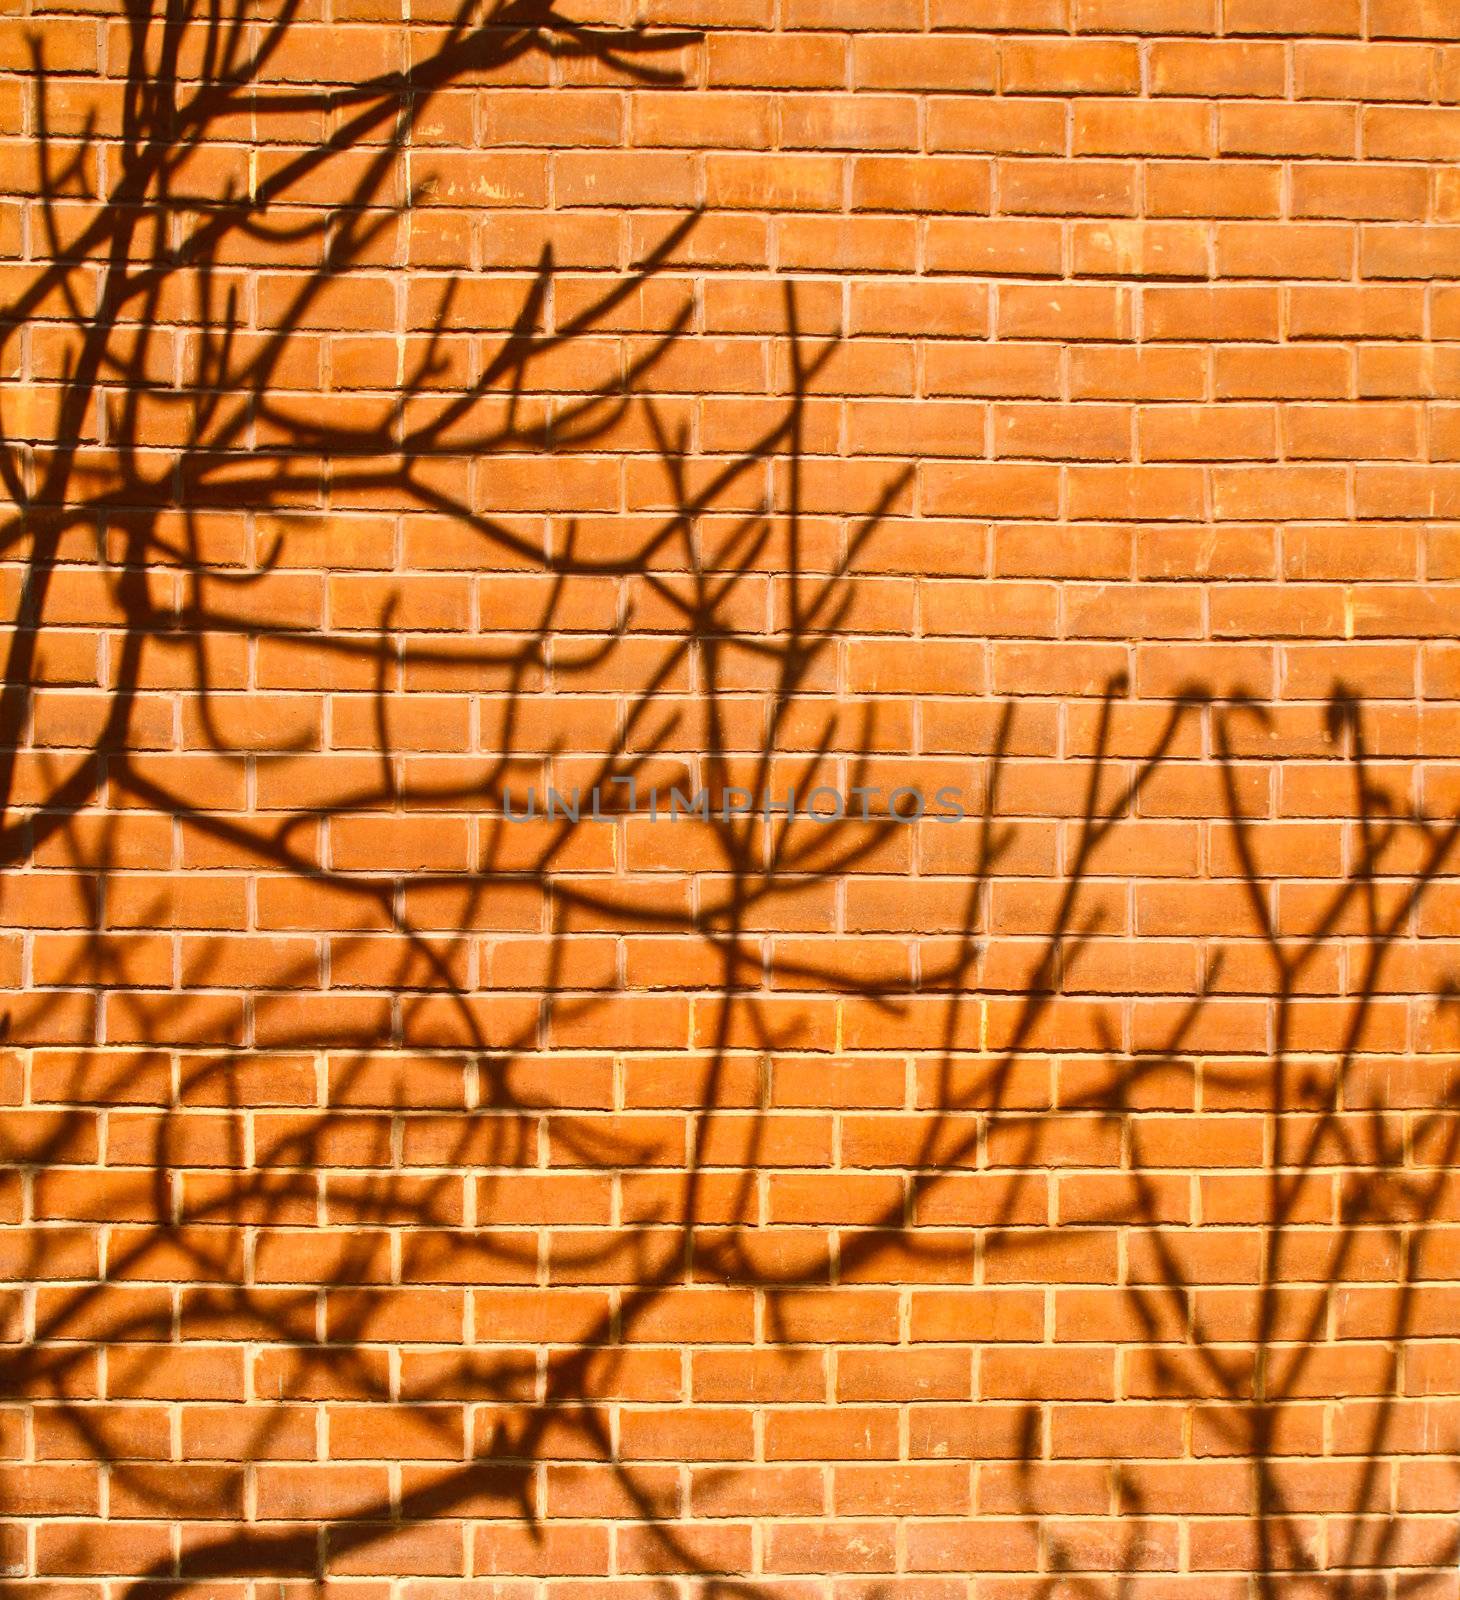 Shadow of a tree on brick wall